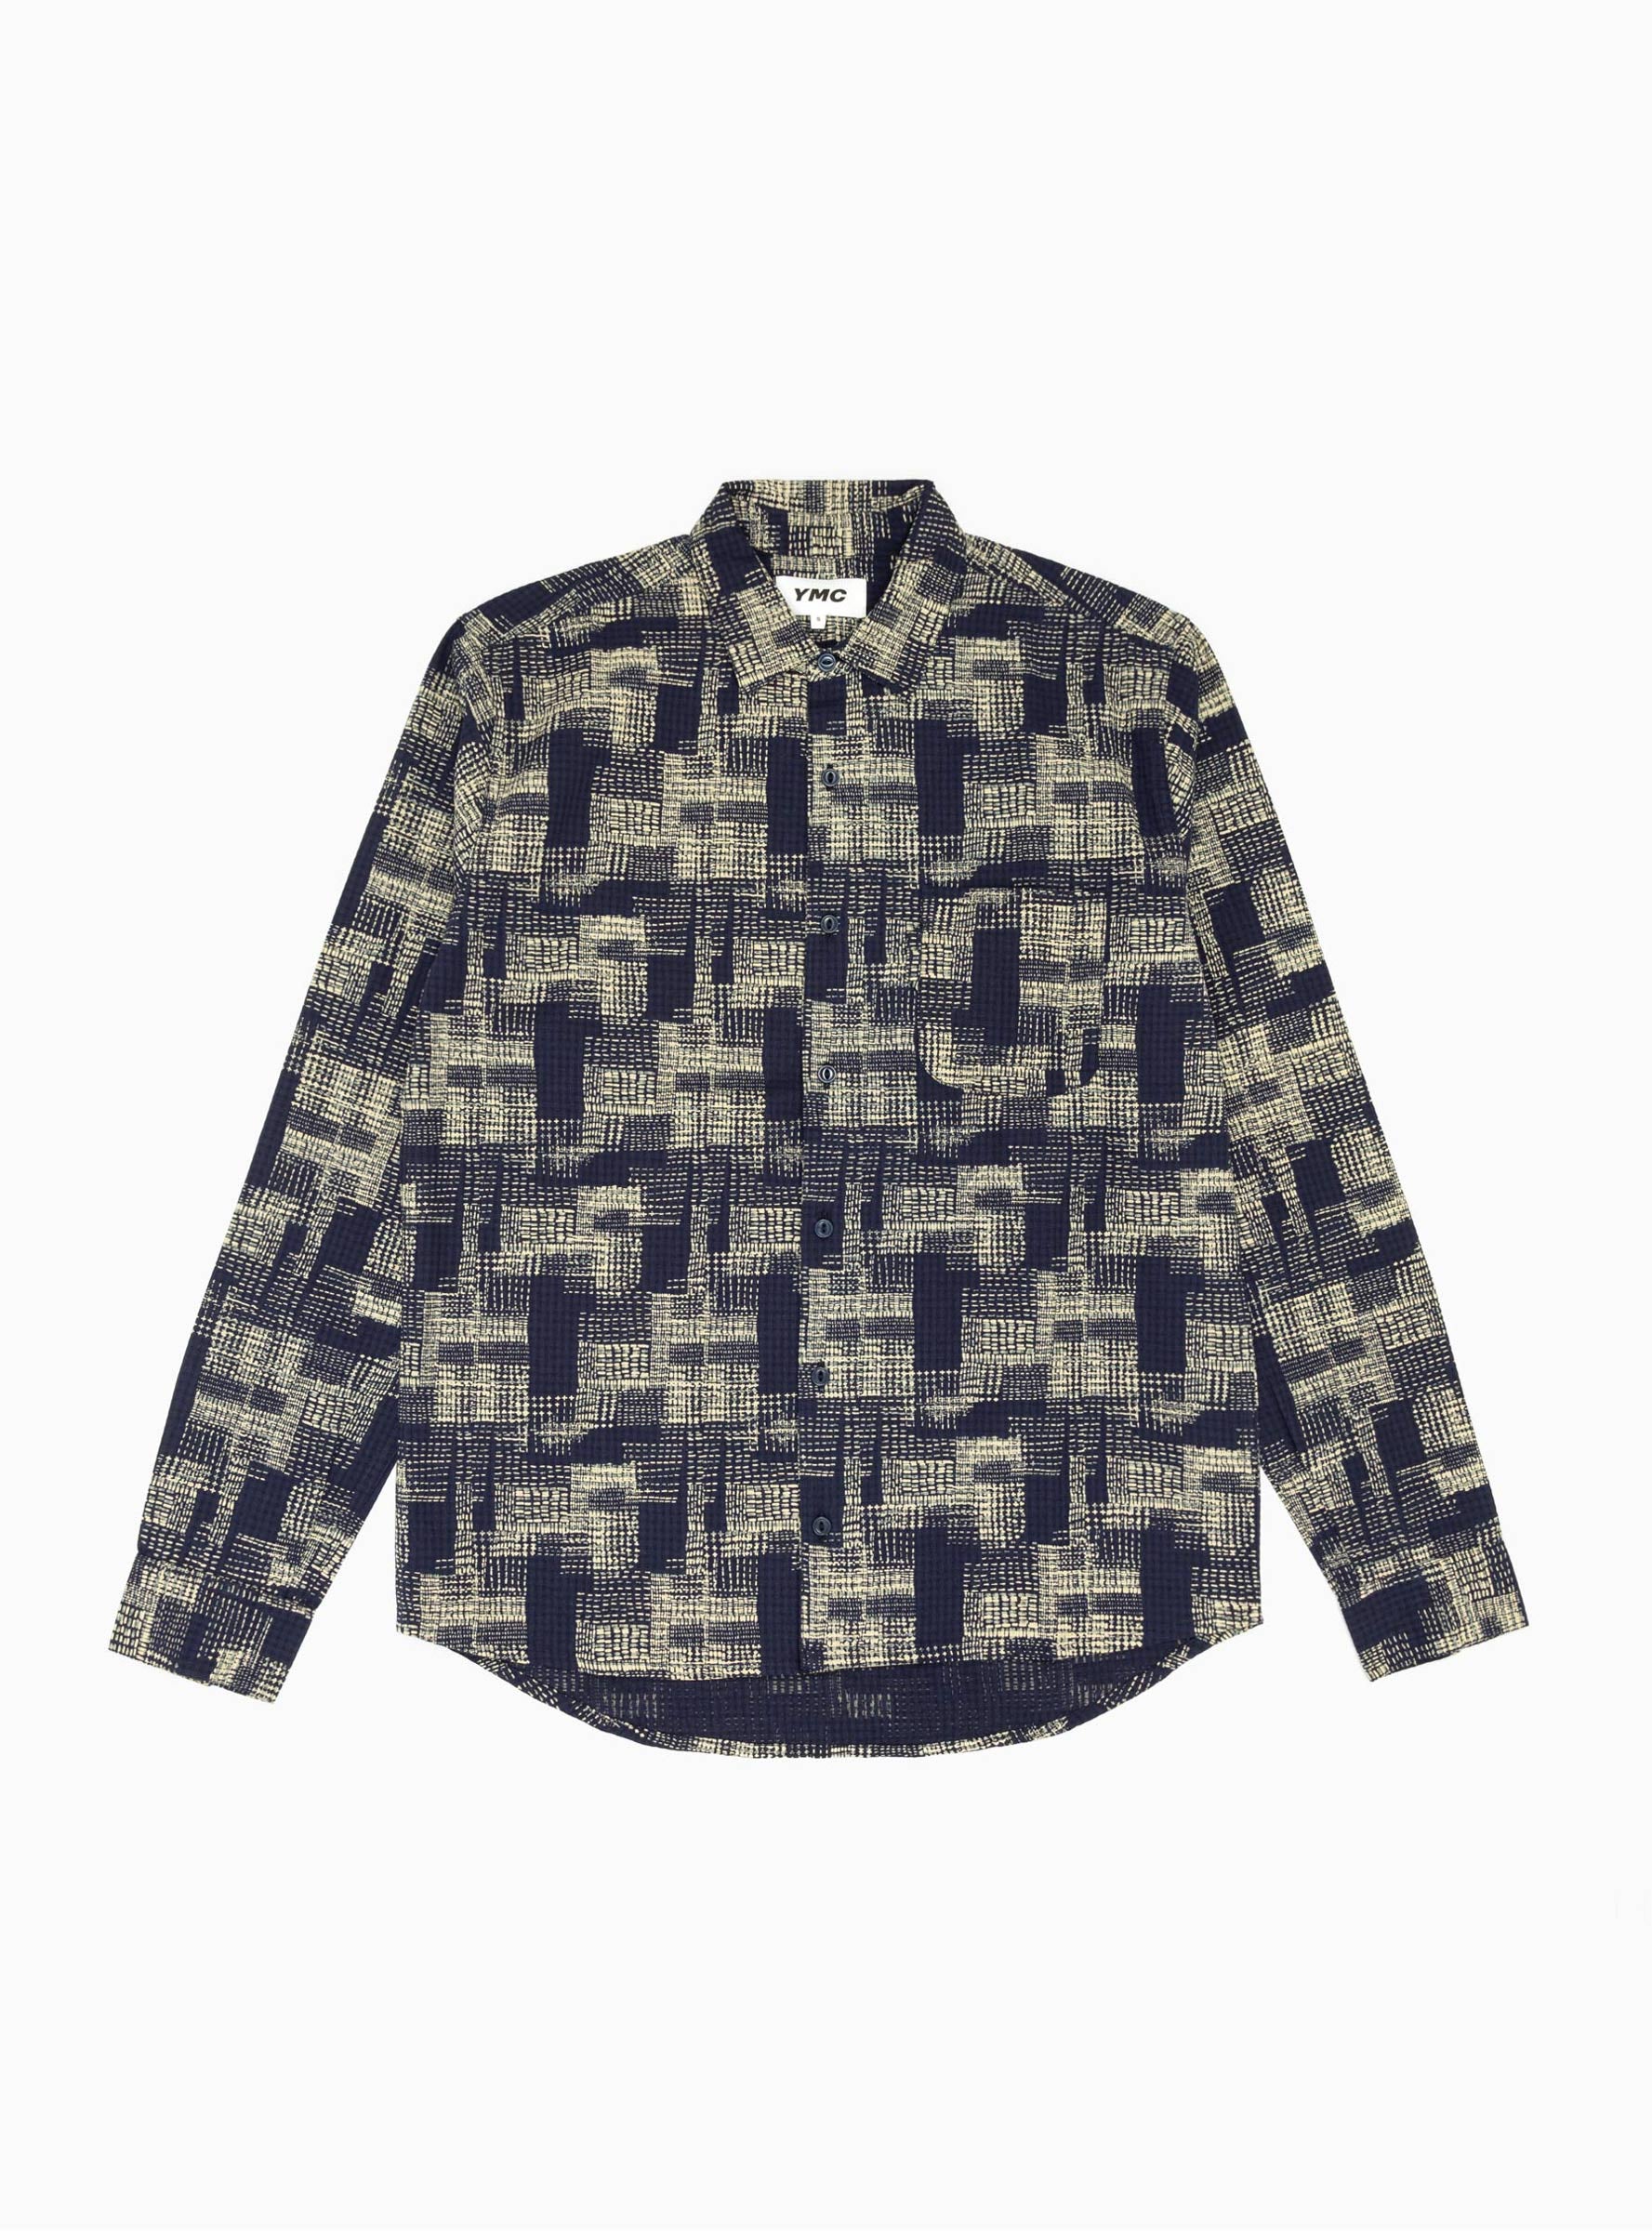 YMC - Block-Print Cotton Seersucker Overshirt - Mens - Navy Multi